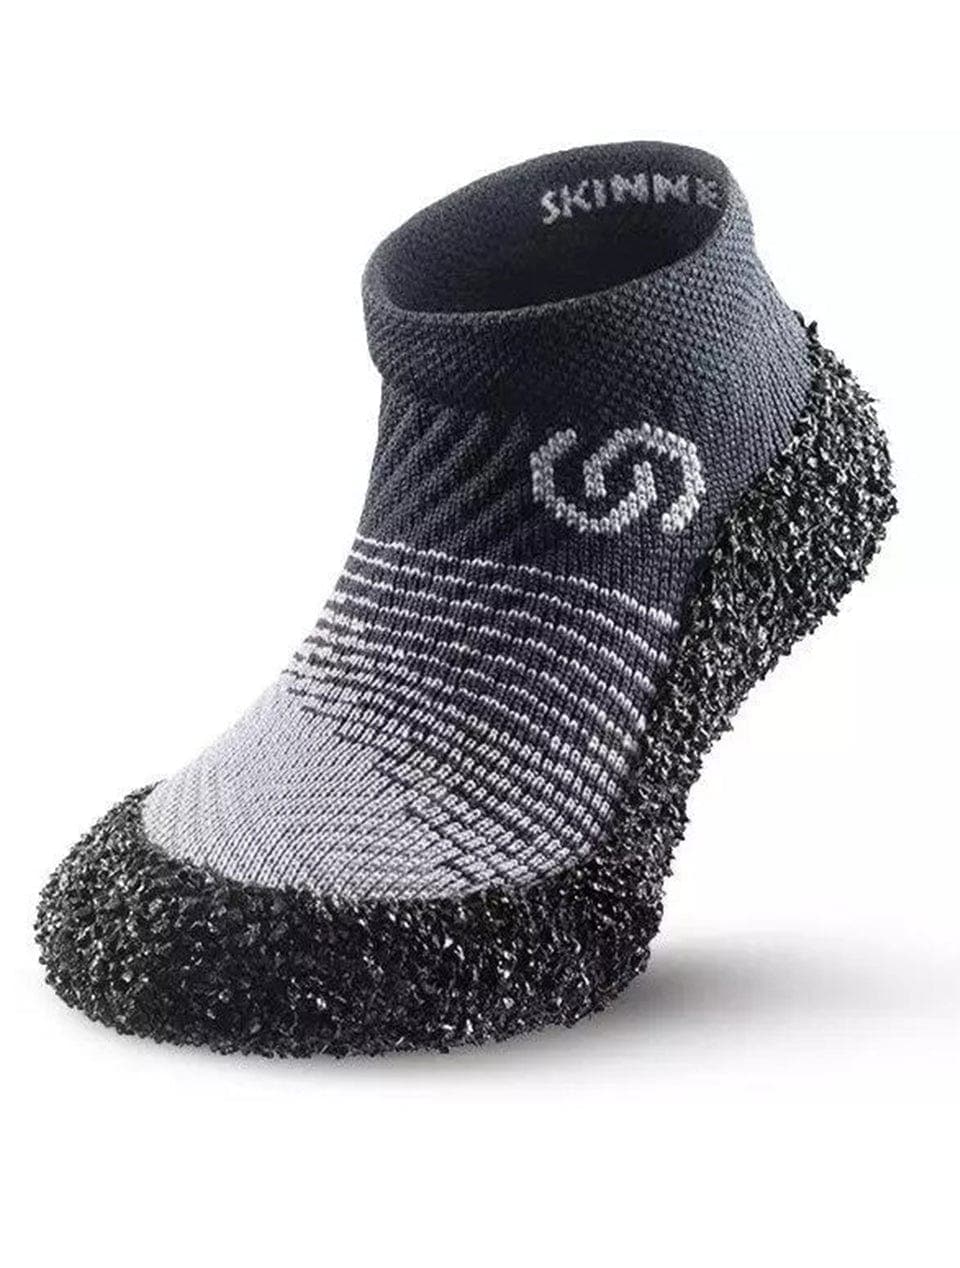 PRSAE (EUR 26-27) Skinners 2.0 Minimalist Kids Footwear - Stone